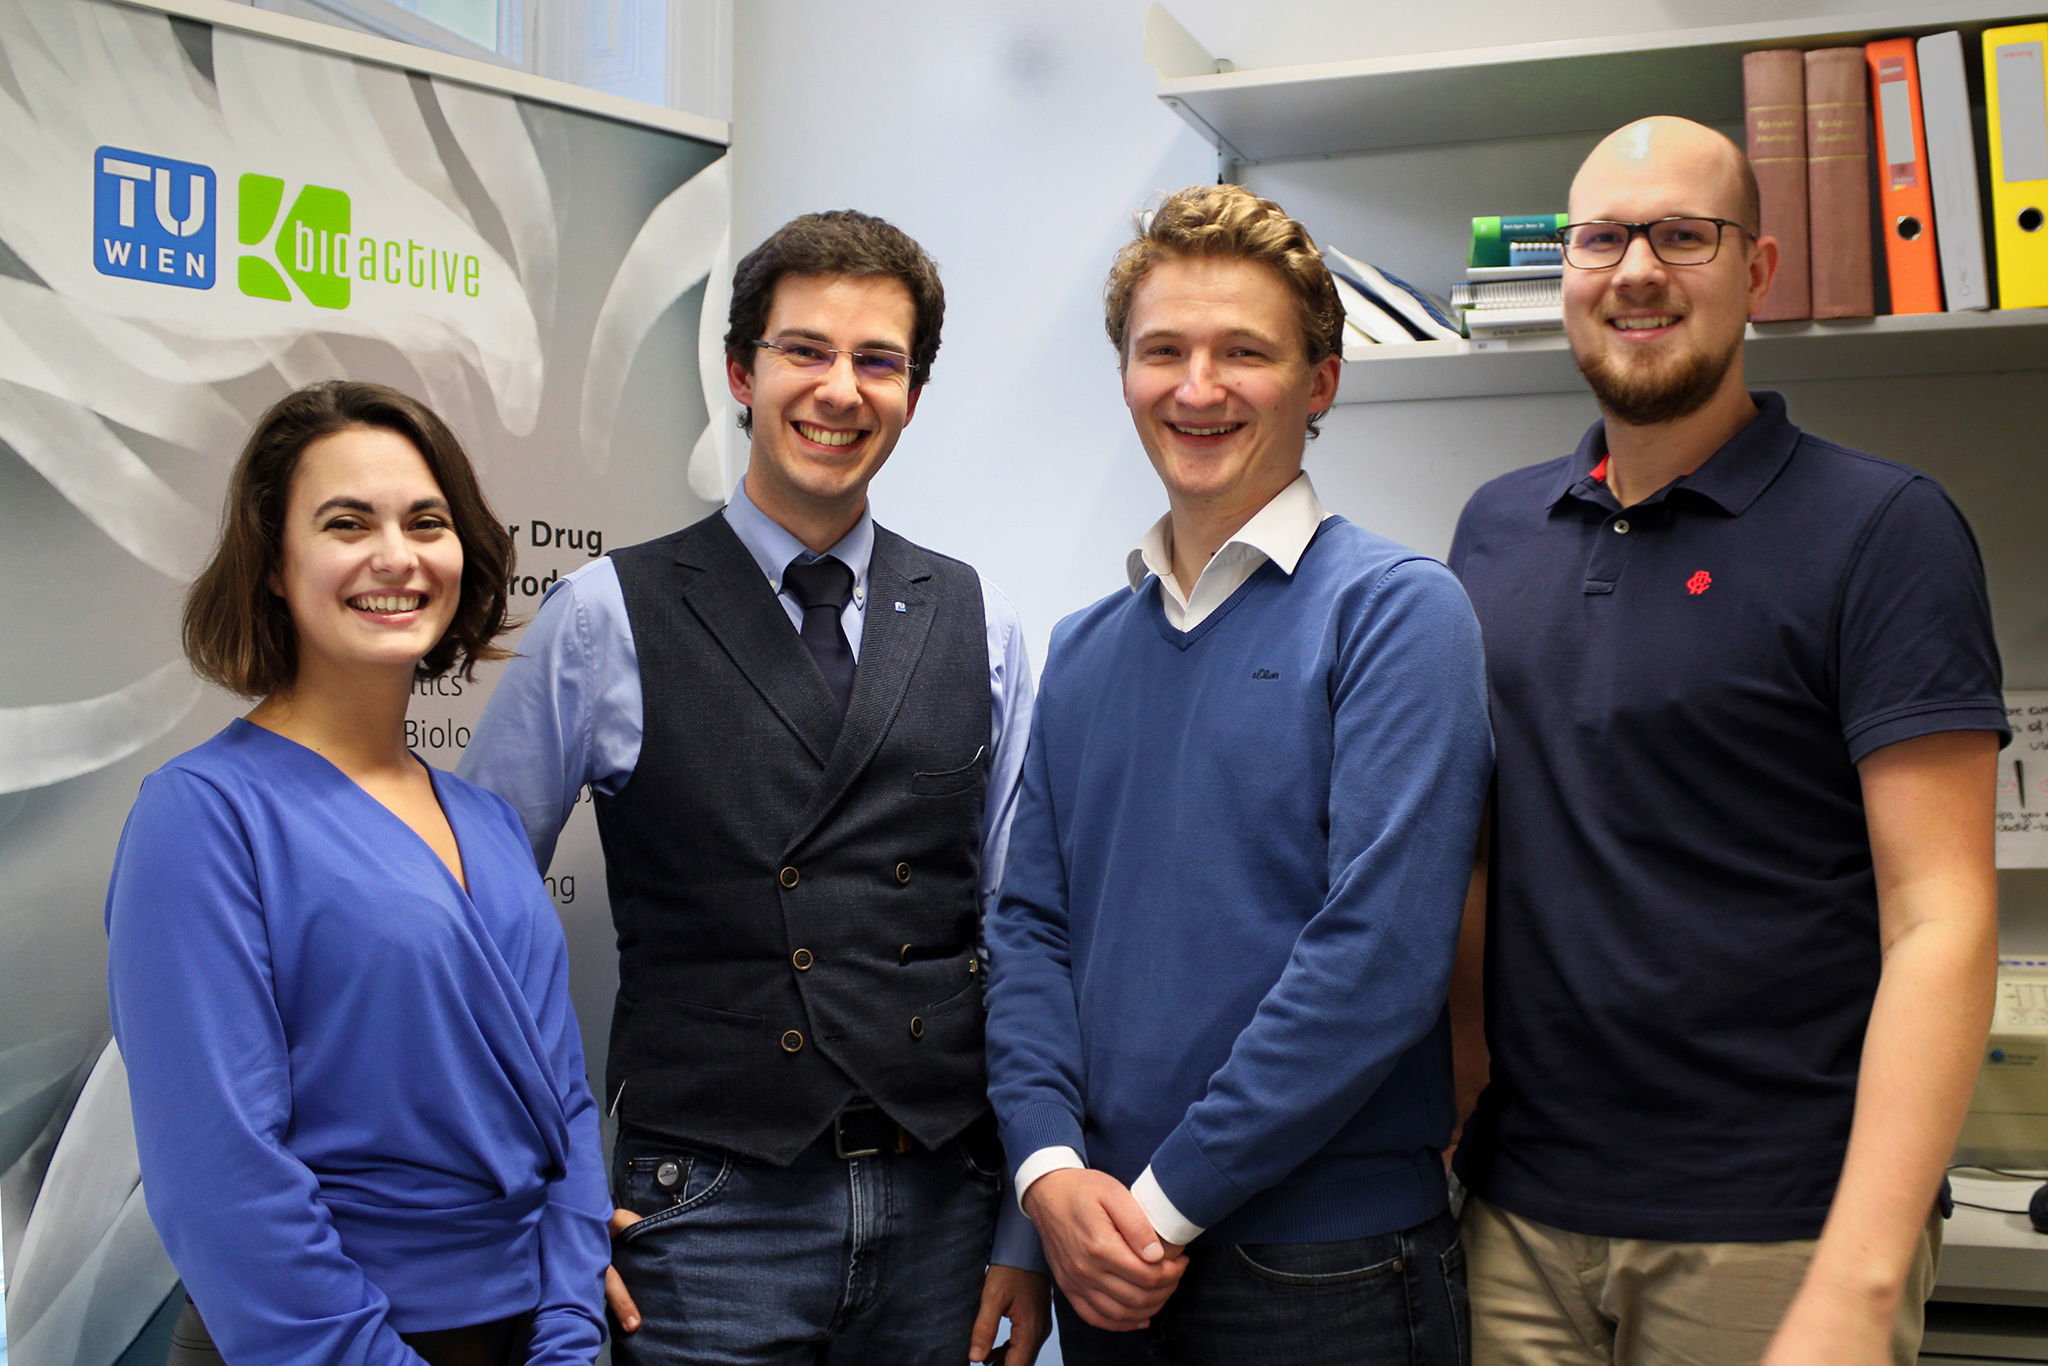 Group photo showing the four researchers in the office: Denise Schaffer, Gabriel Alexander Vignolle, Leopold Zehetner, Christian Derntl